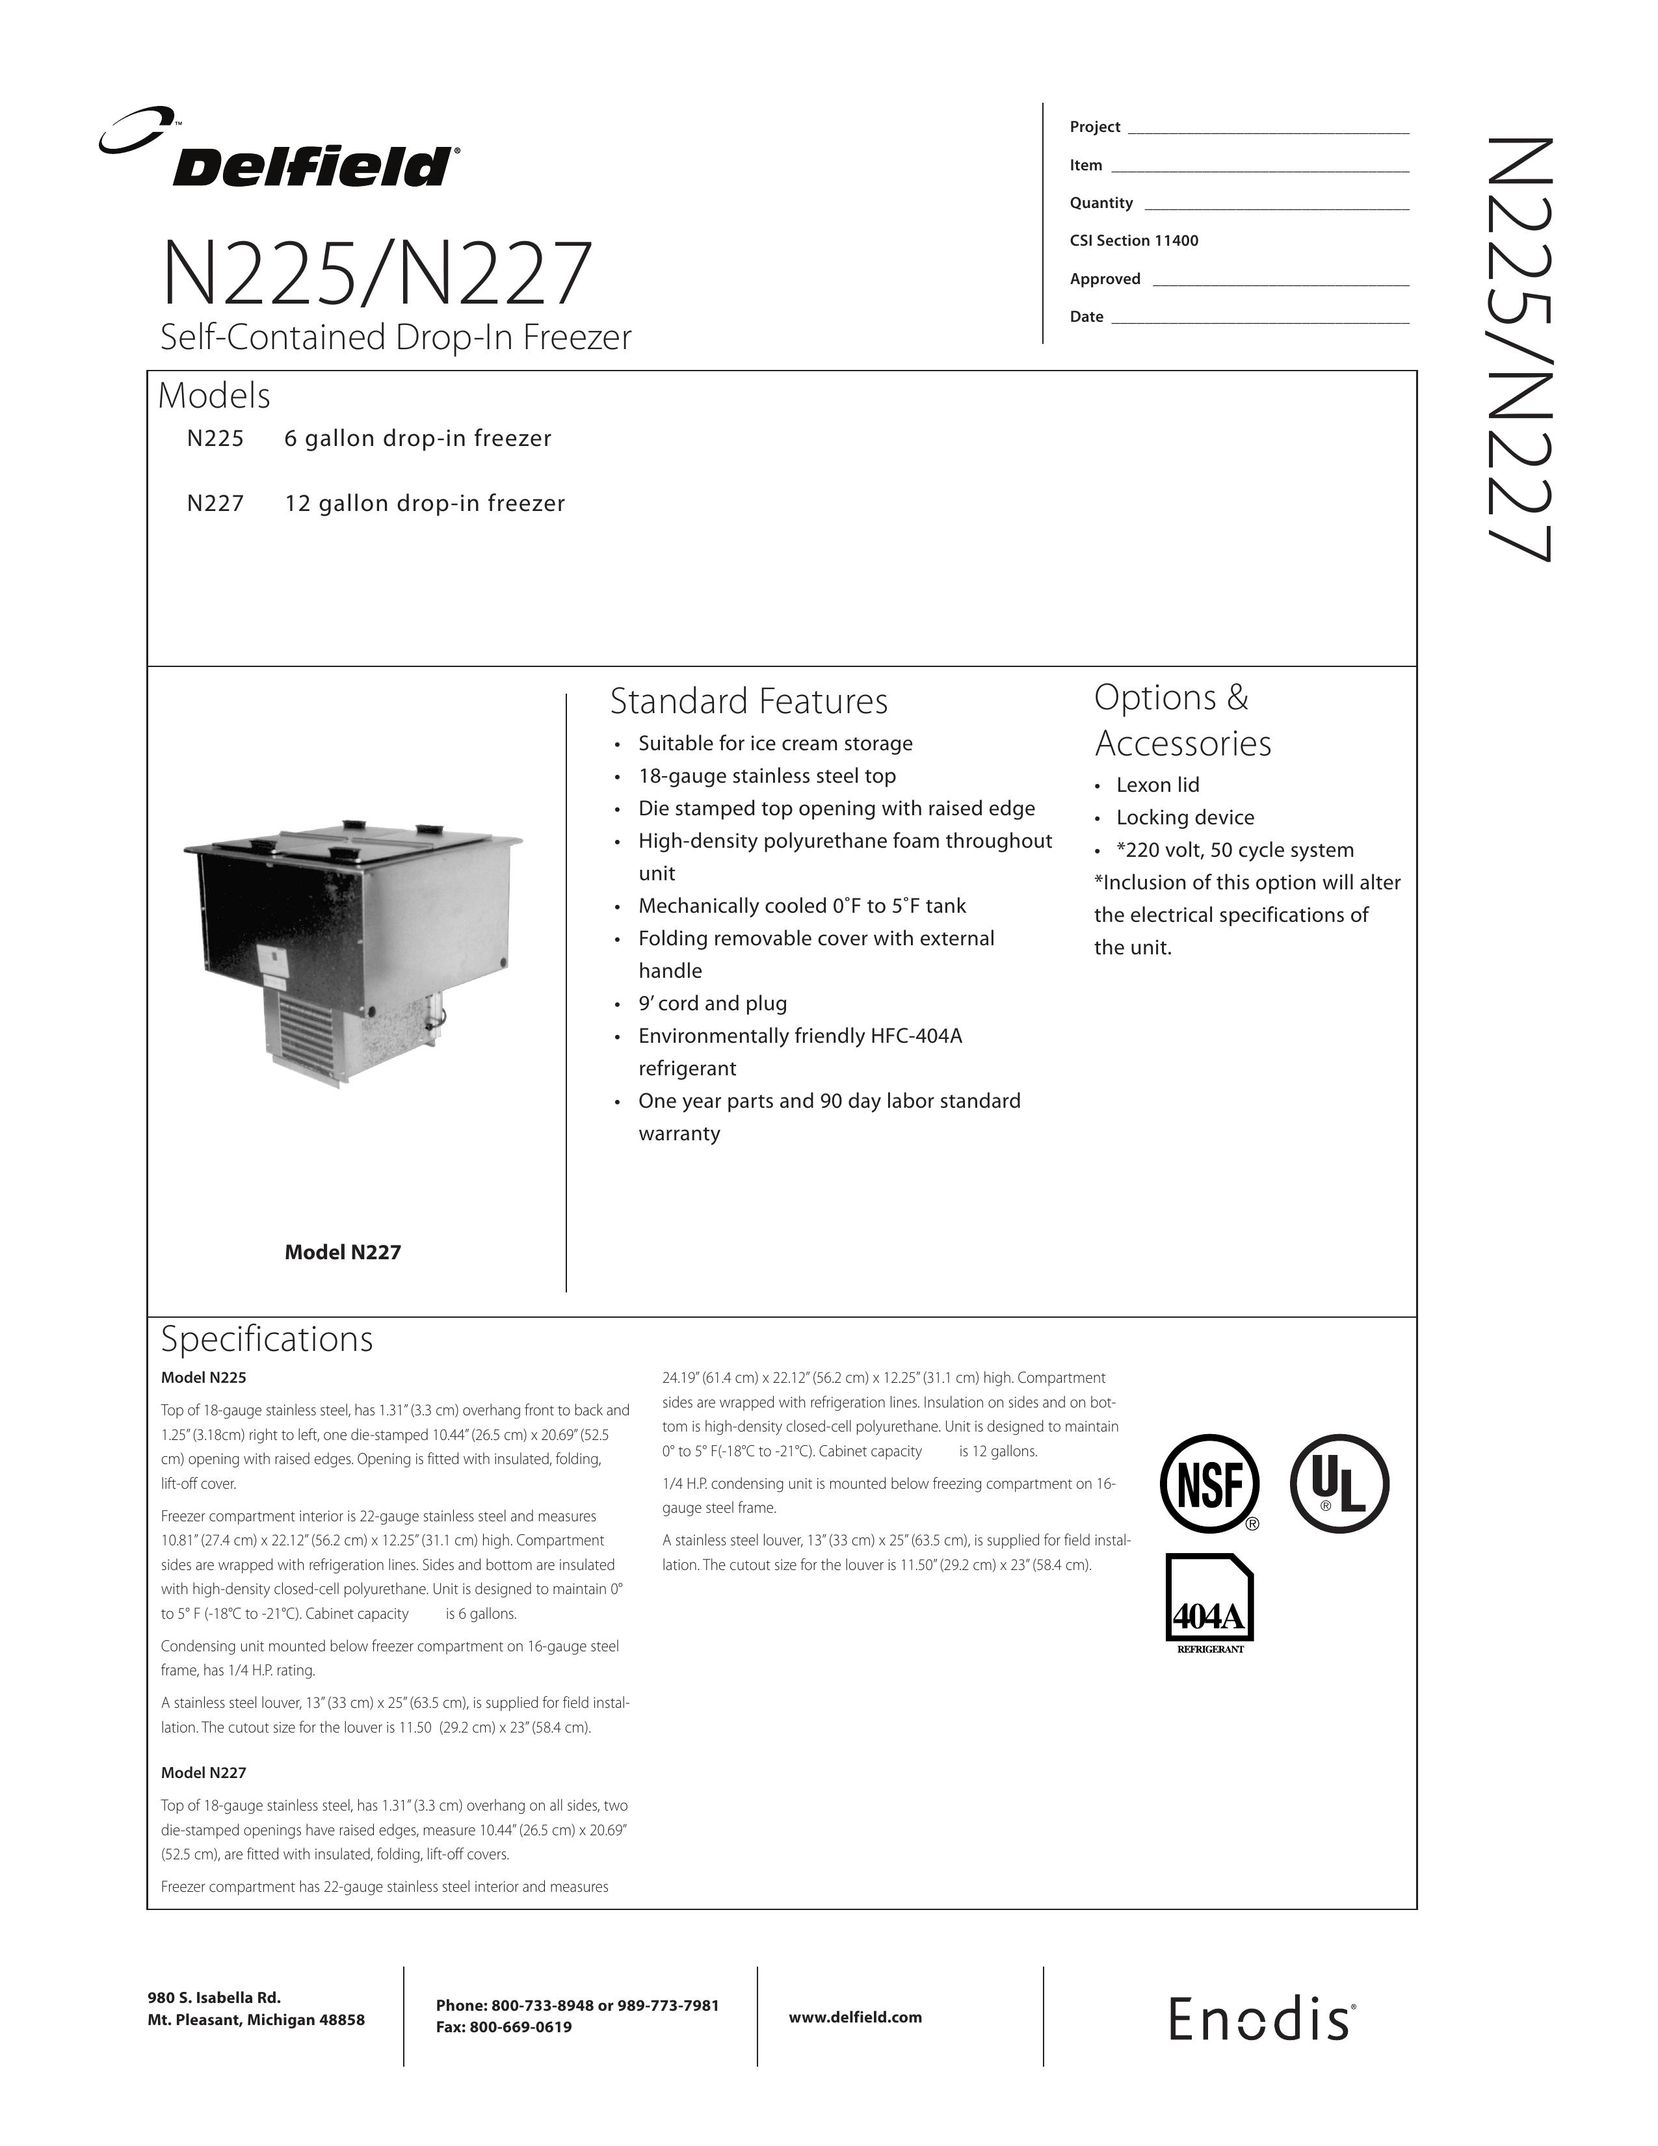 Delfield N225 Freezer User Manual